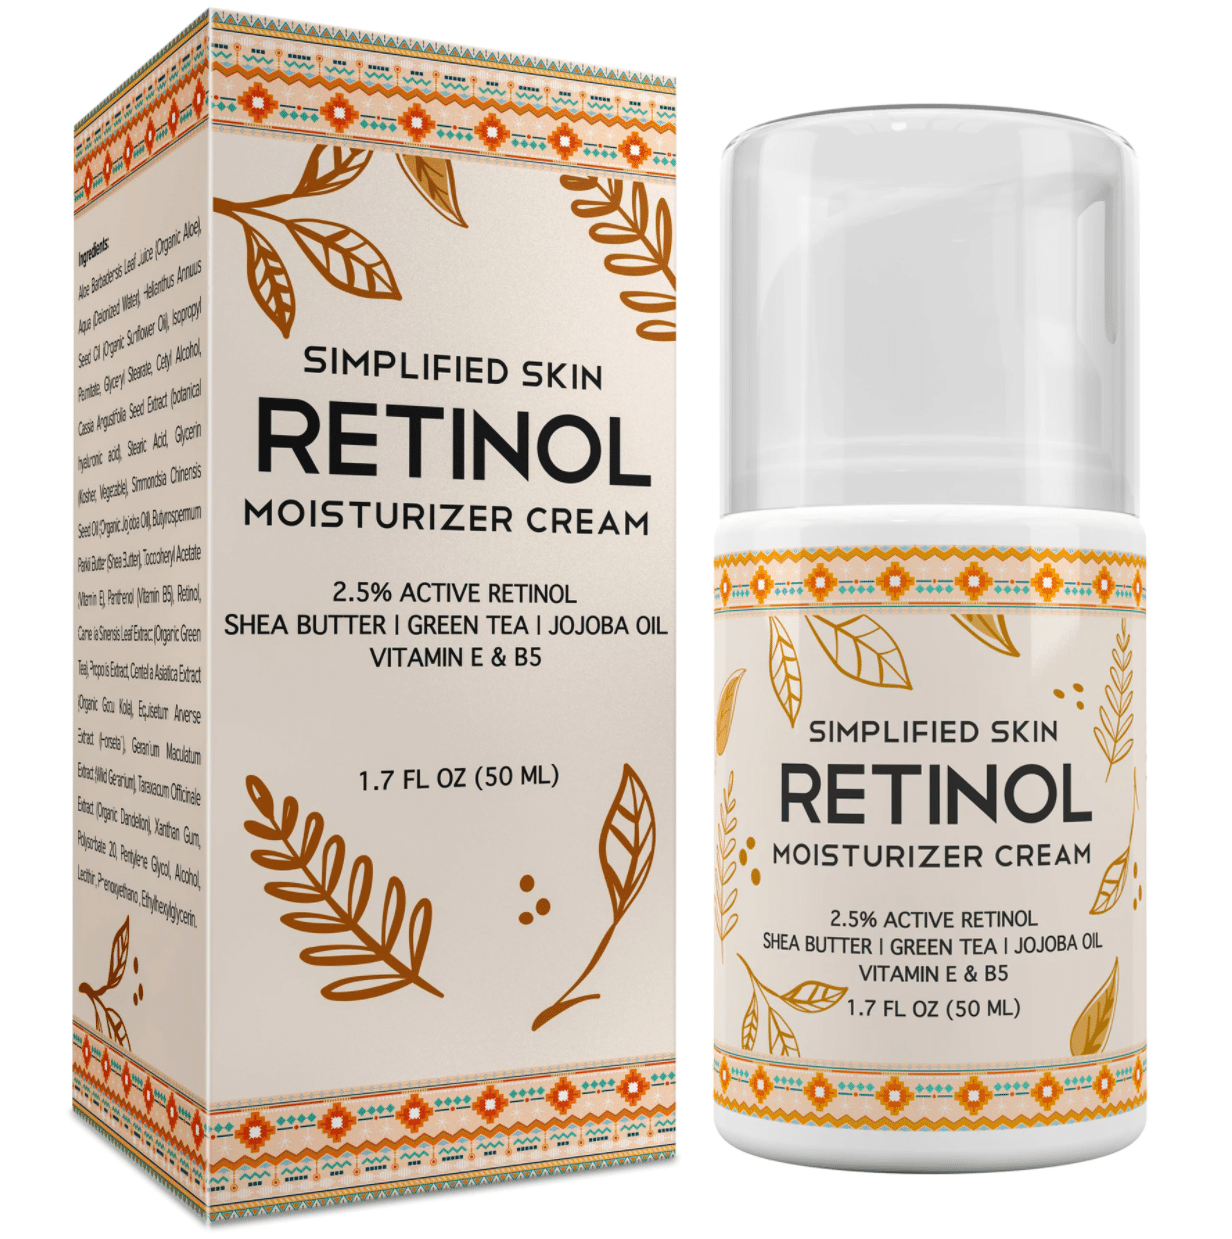 Simplified Skin Retinol Moisturizer Cream | $14.95 | 